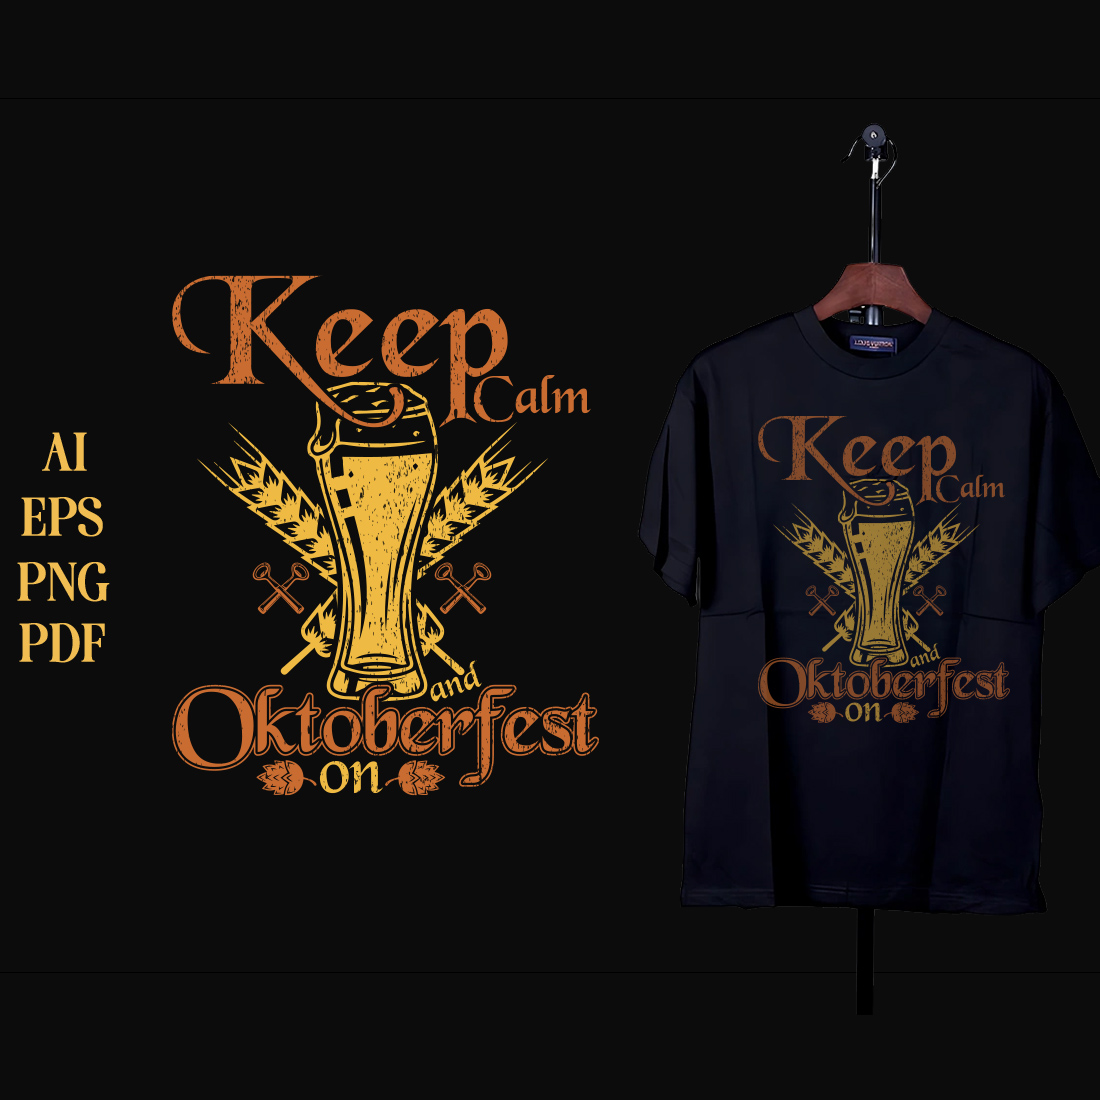 Oktoberfest typography t shirt design cover image.